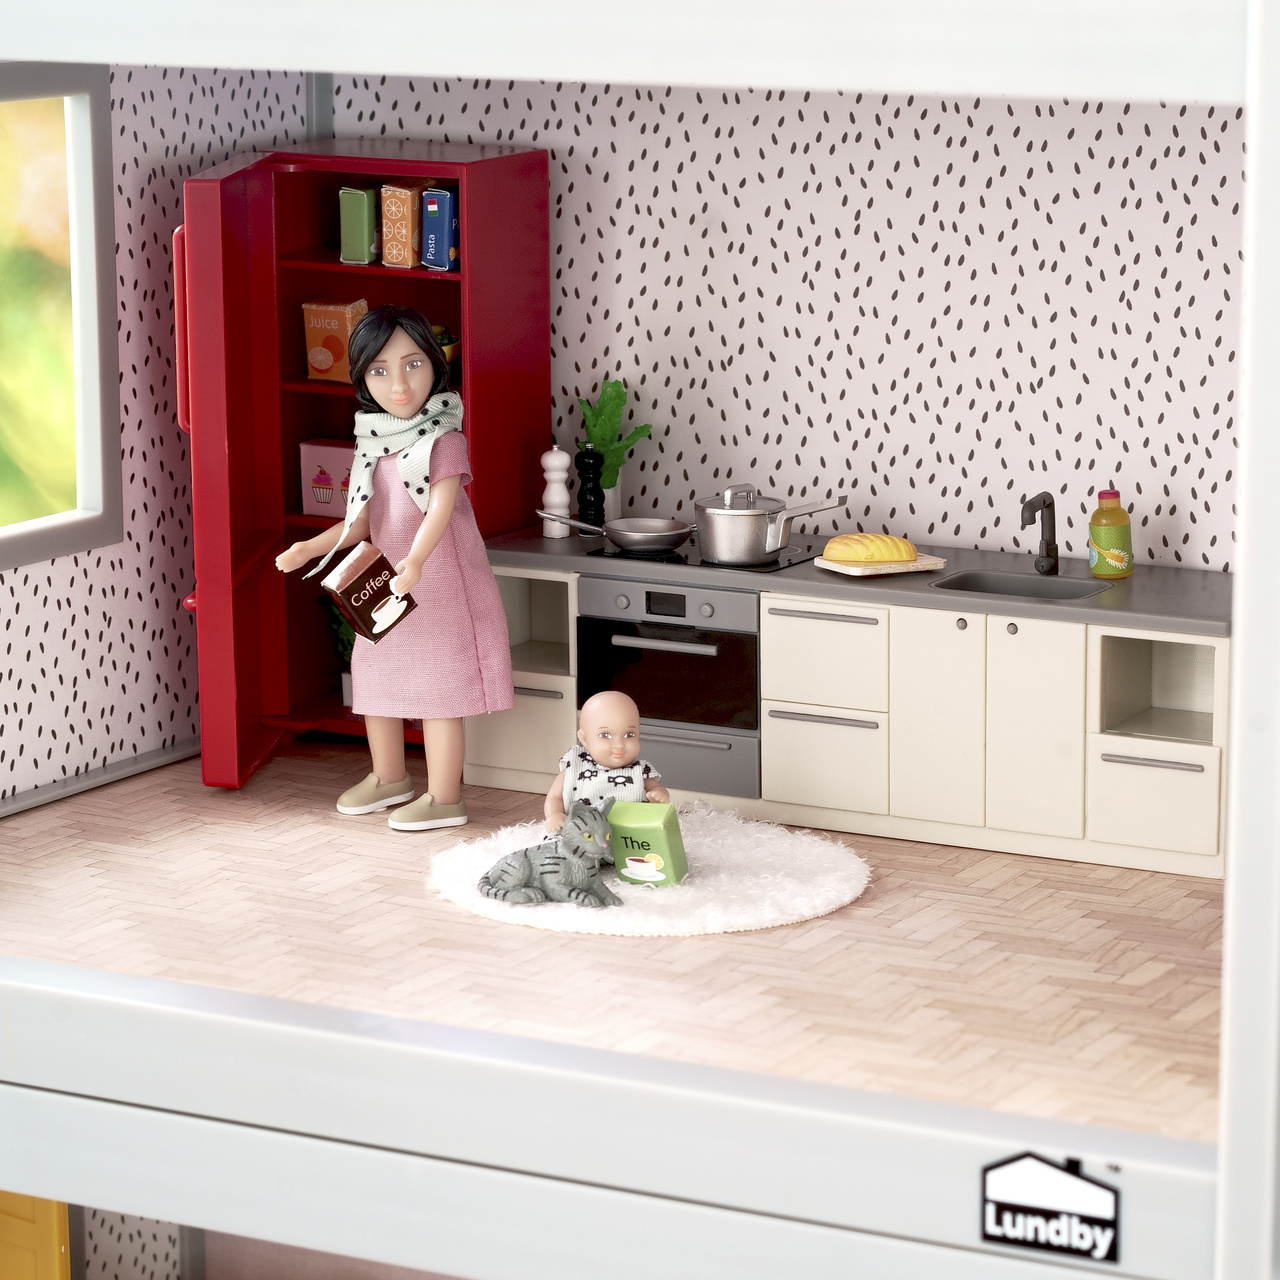 Doll house furniture & doll house accessories lundby dollhouse furniture kitchen fridge, cooker & dishwasher basic